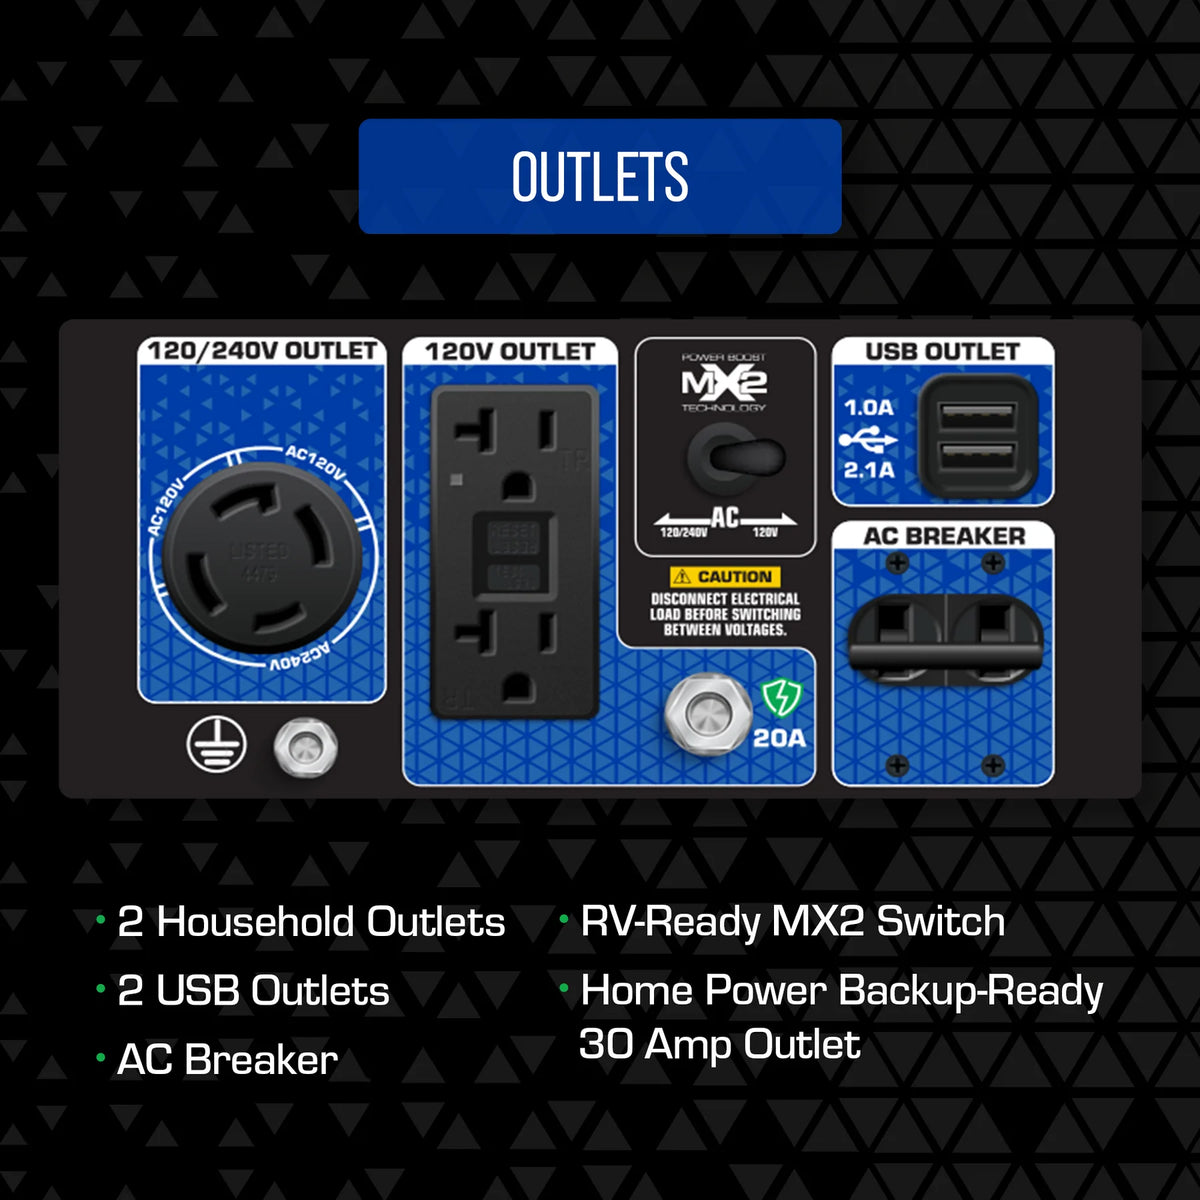 DuroMax XP5500HX 5,500-Watt/4,500-Watt 210Vcc Electric Start Dual Fuel Portable Generator with CO Alert